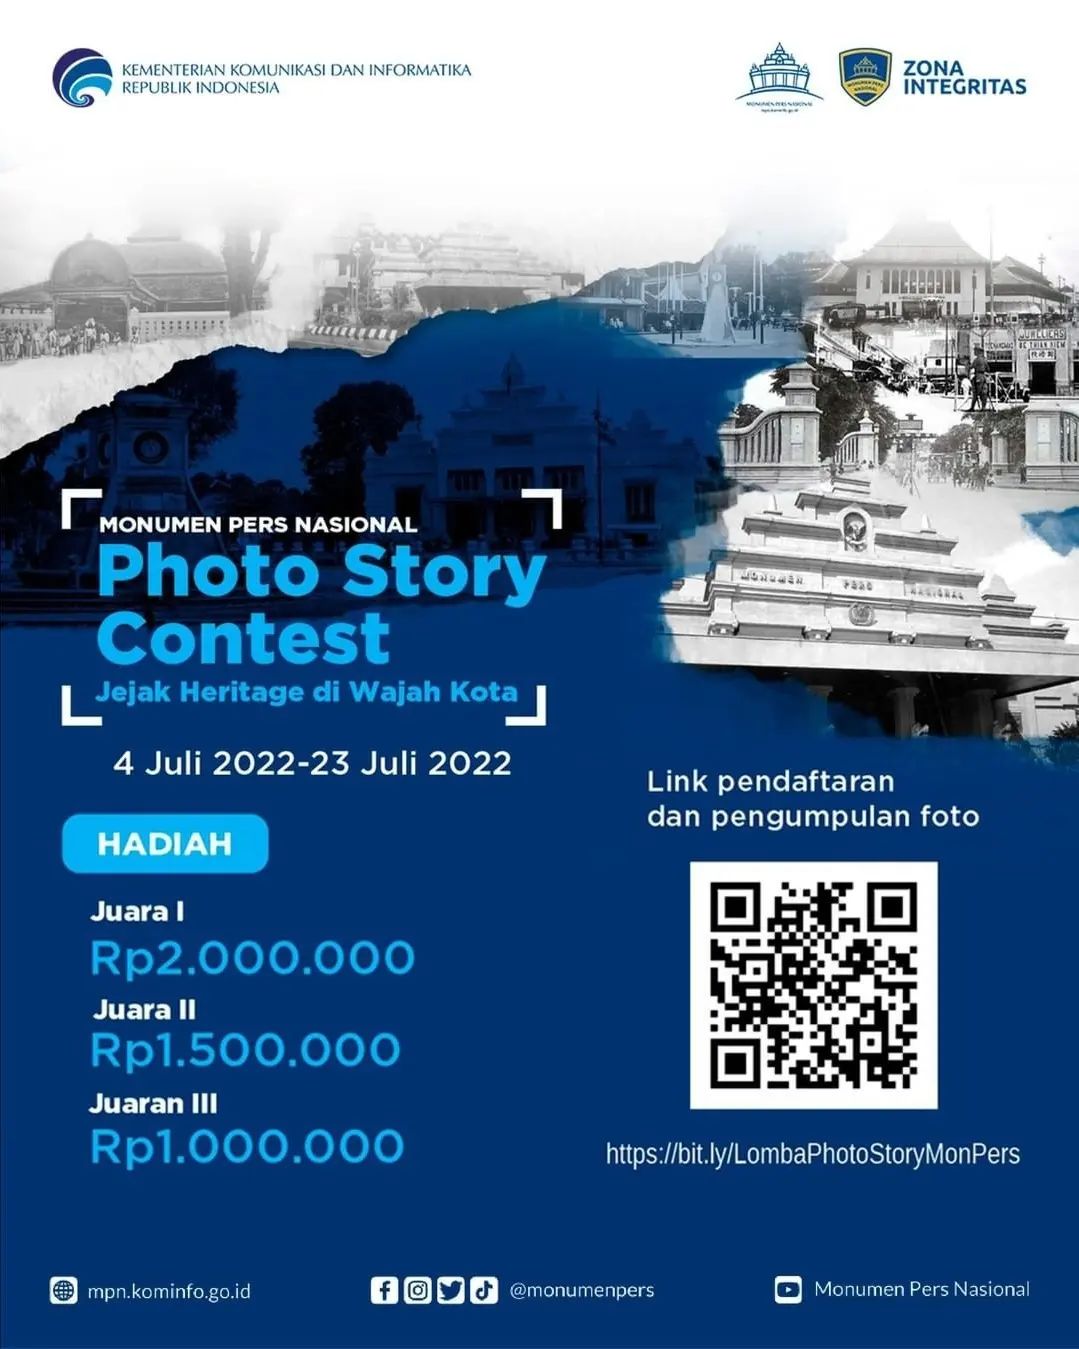 Gratis Photo Story Contest Monumen Pers Nasional 2022